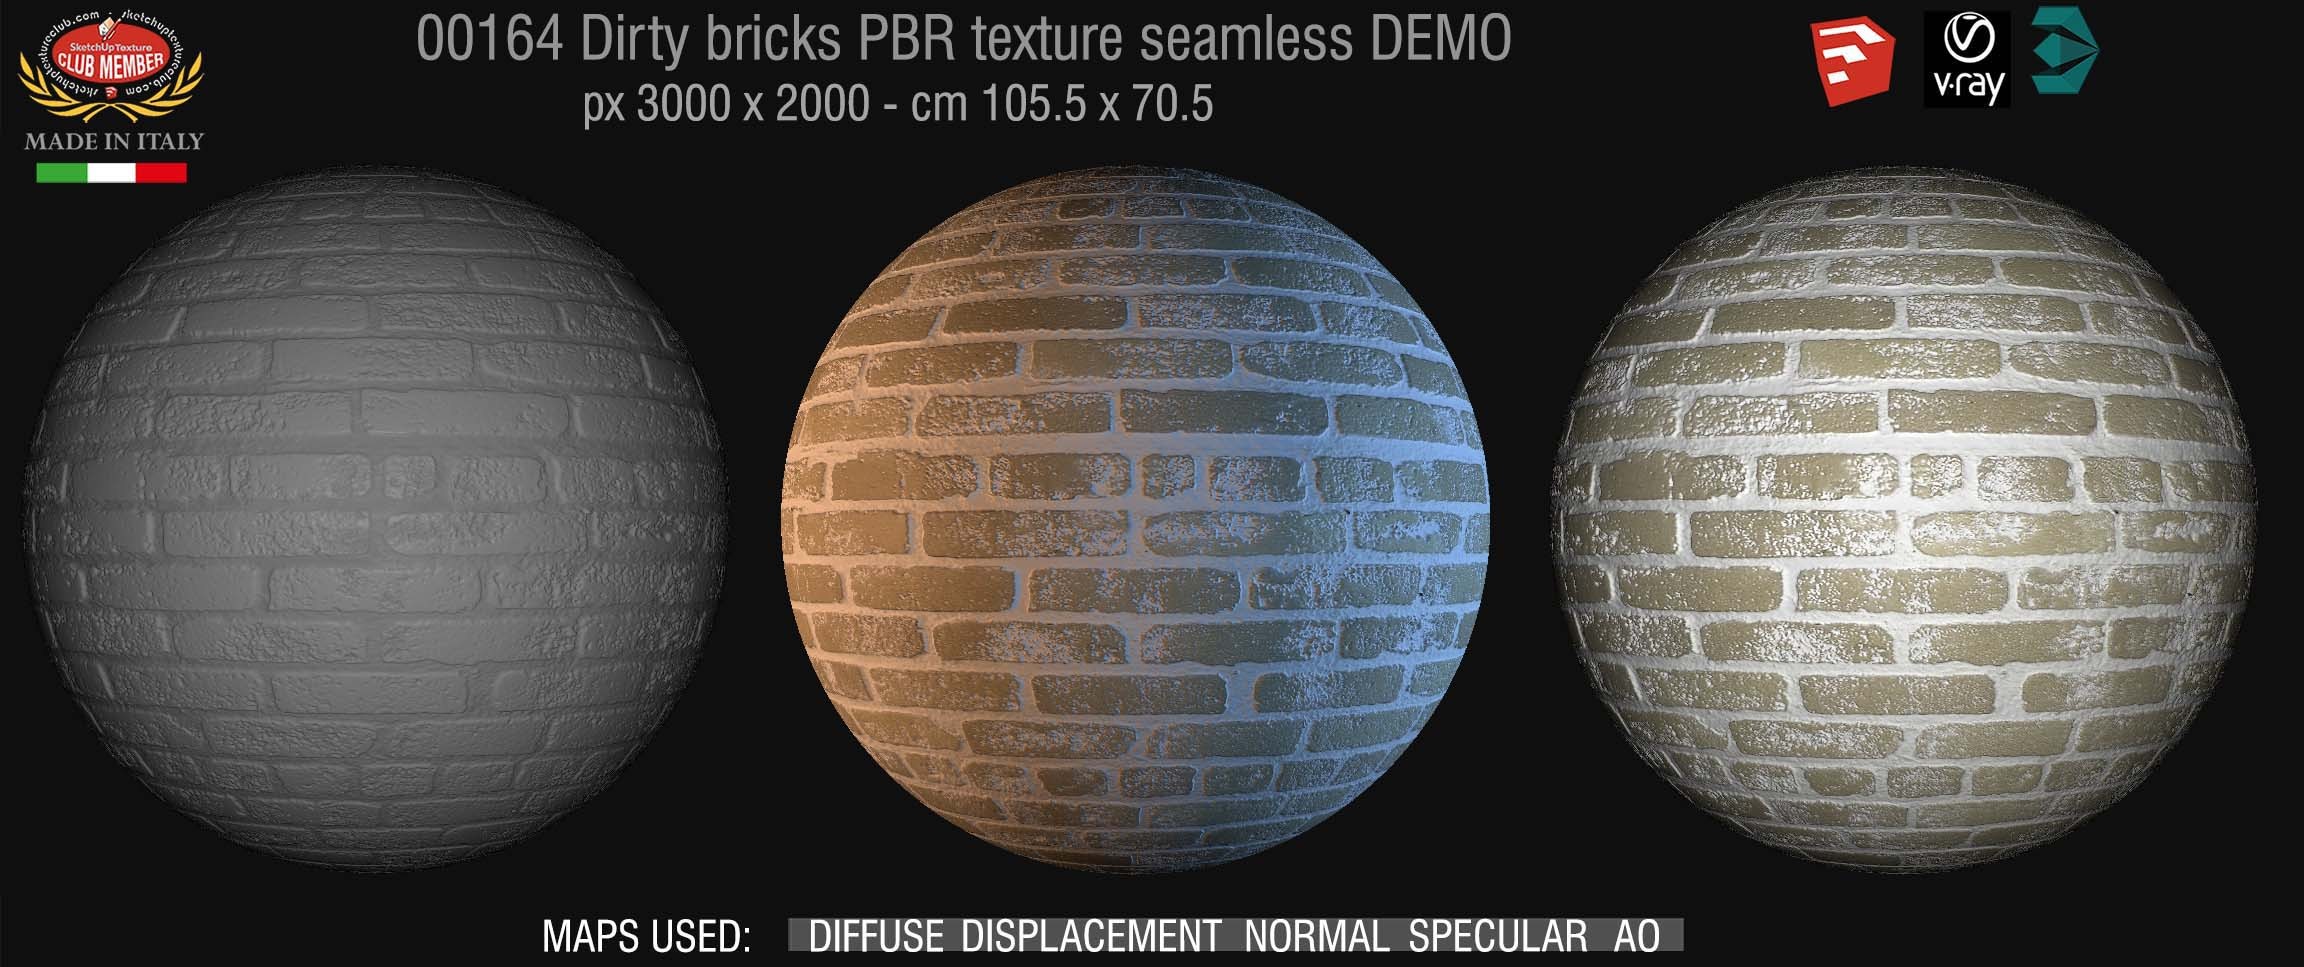 0164 Dirty bricks PBR texture seamless DEMO